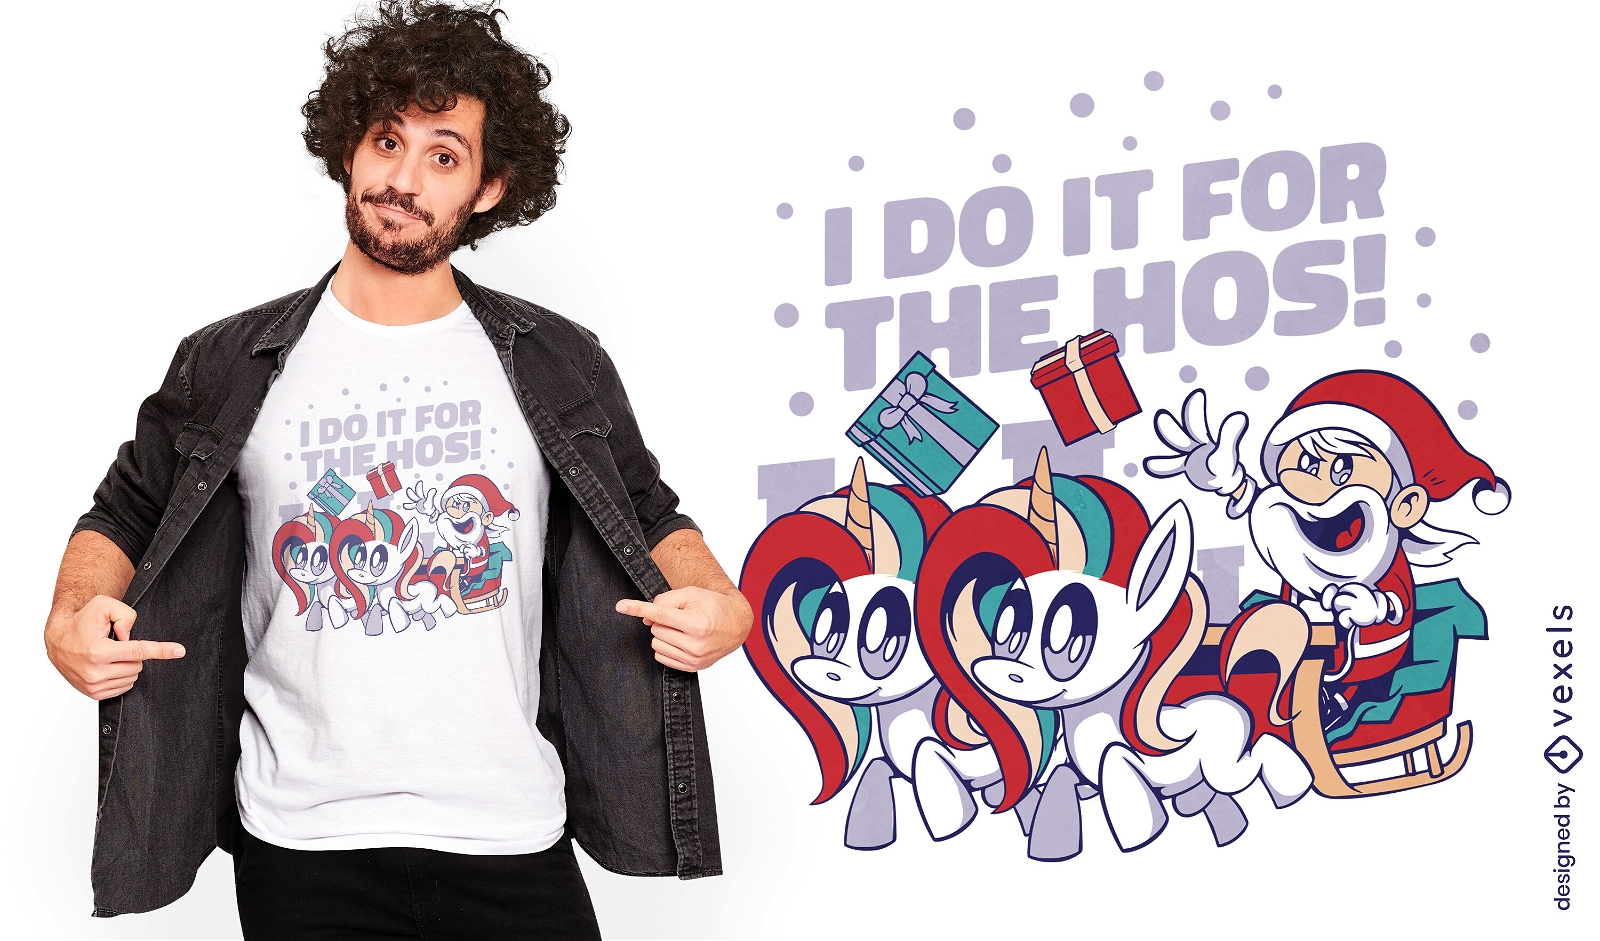 Funny Christmas unicorns quote t-shirt design